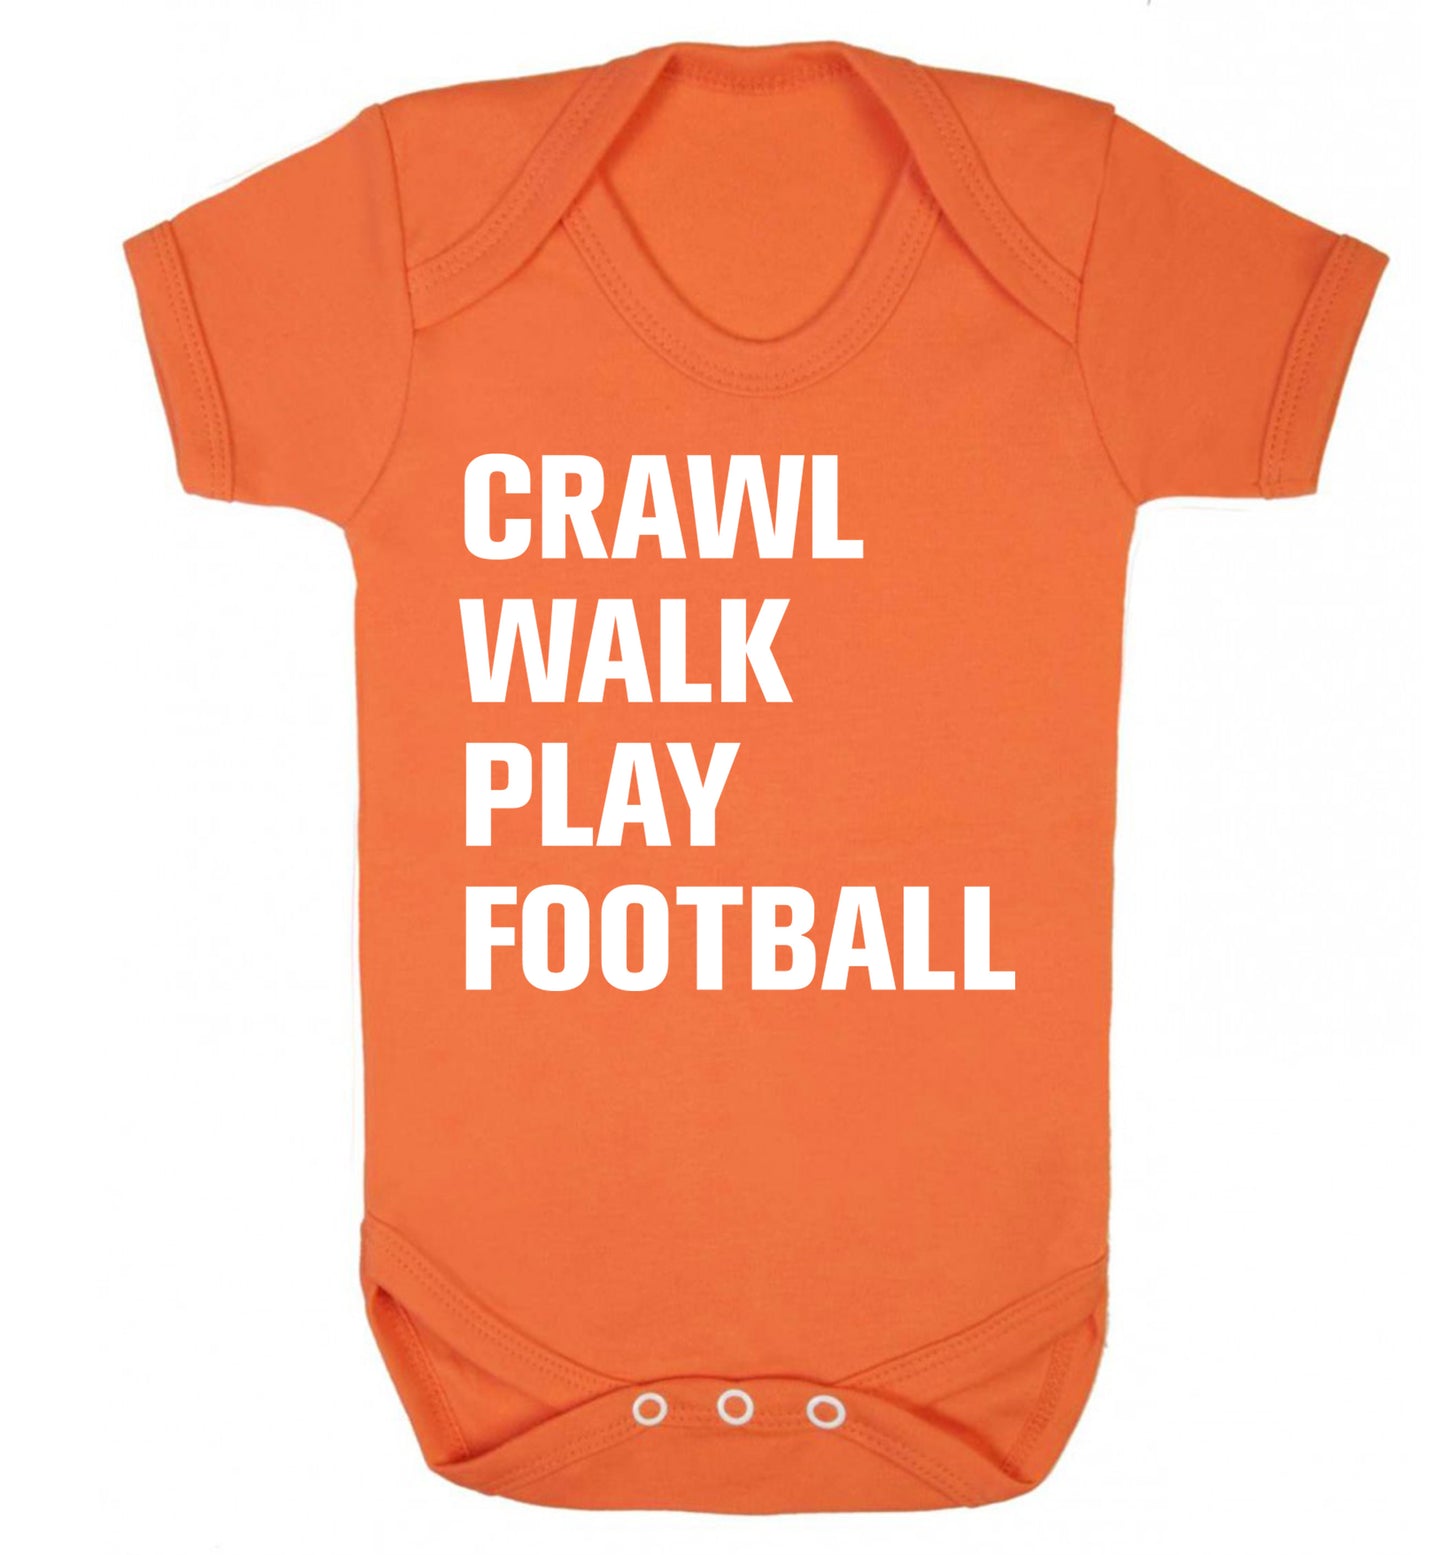 Crawl, walk, play football Baby Vest orange 18-24 months